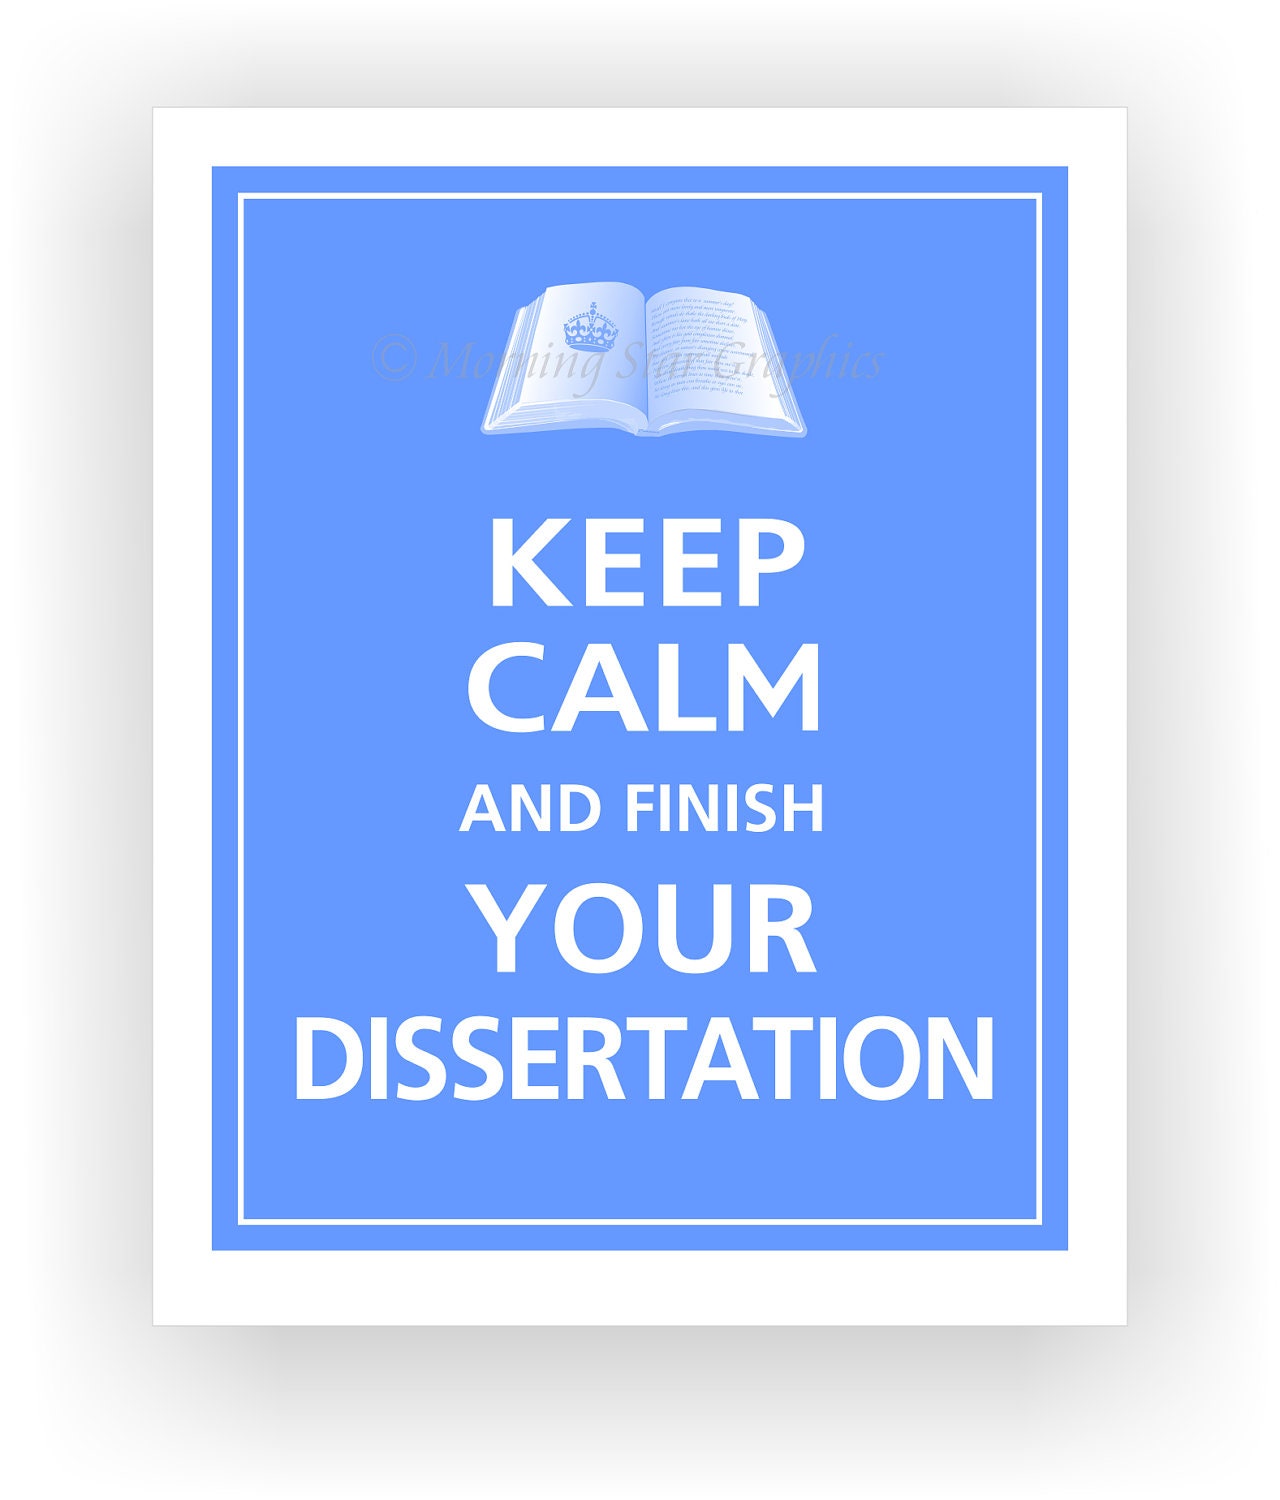 Finish your dissertation com